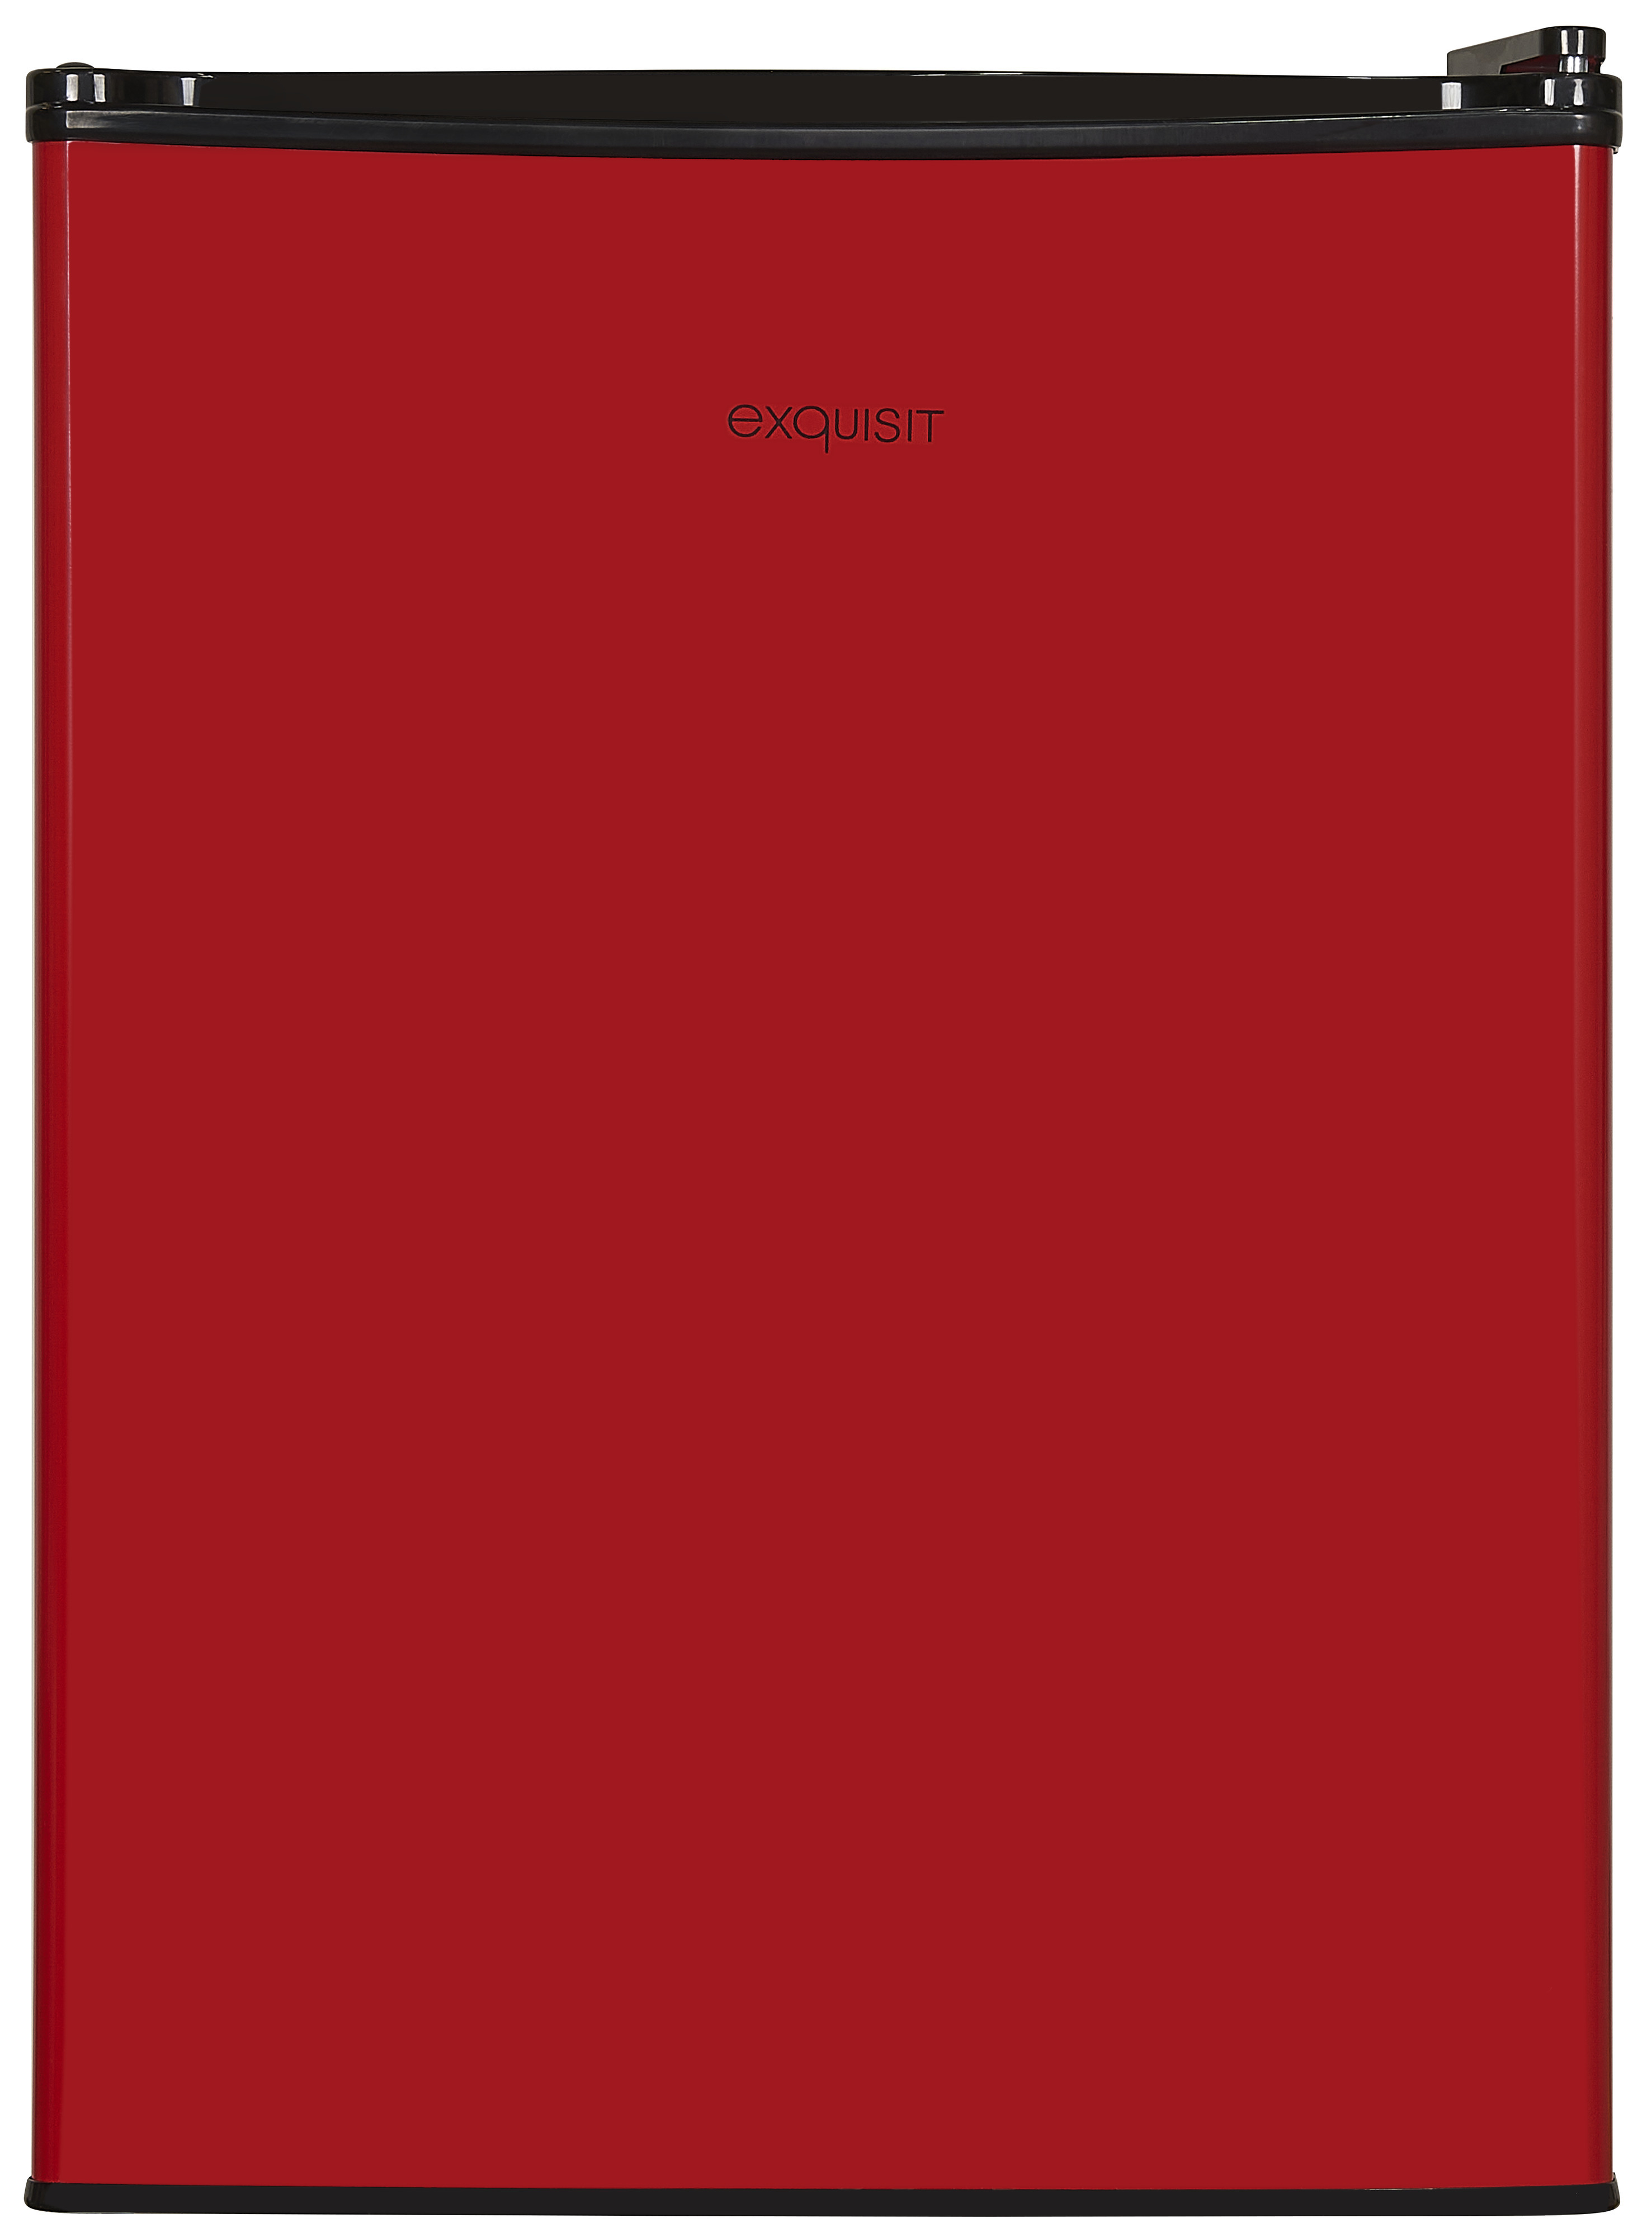 KB60-V-090E rot hoch, Kühlschrank mm (E, Rot) EXQUISIT 620